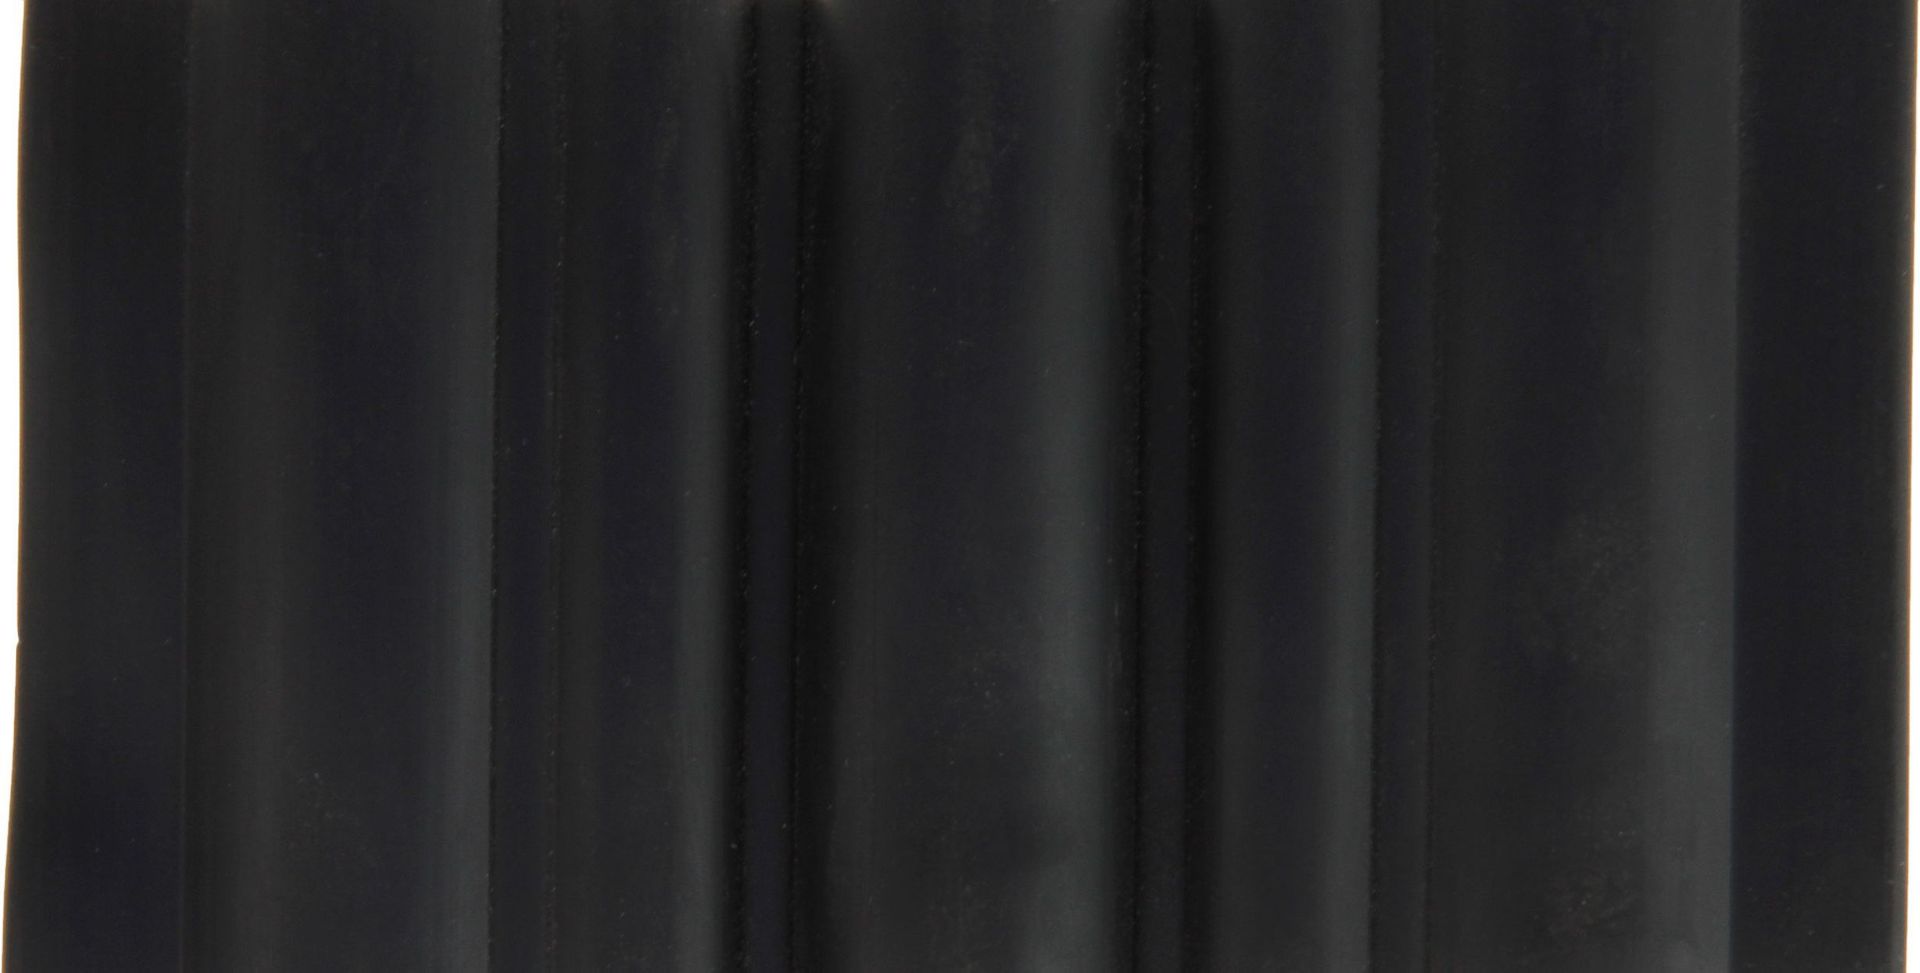 Лента дублирующая, черная, 120 мм SSCL00008603 лента дублирующая черная 120 мм ad00000436